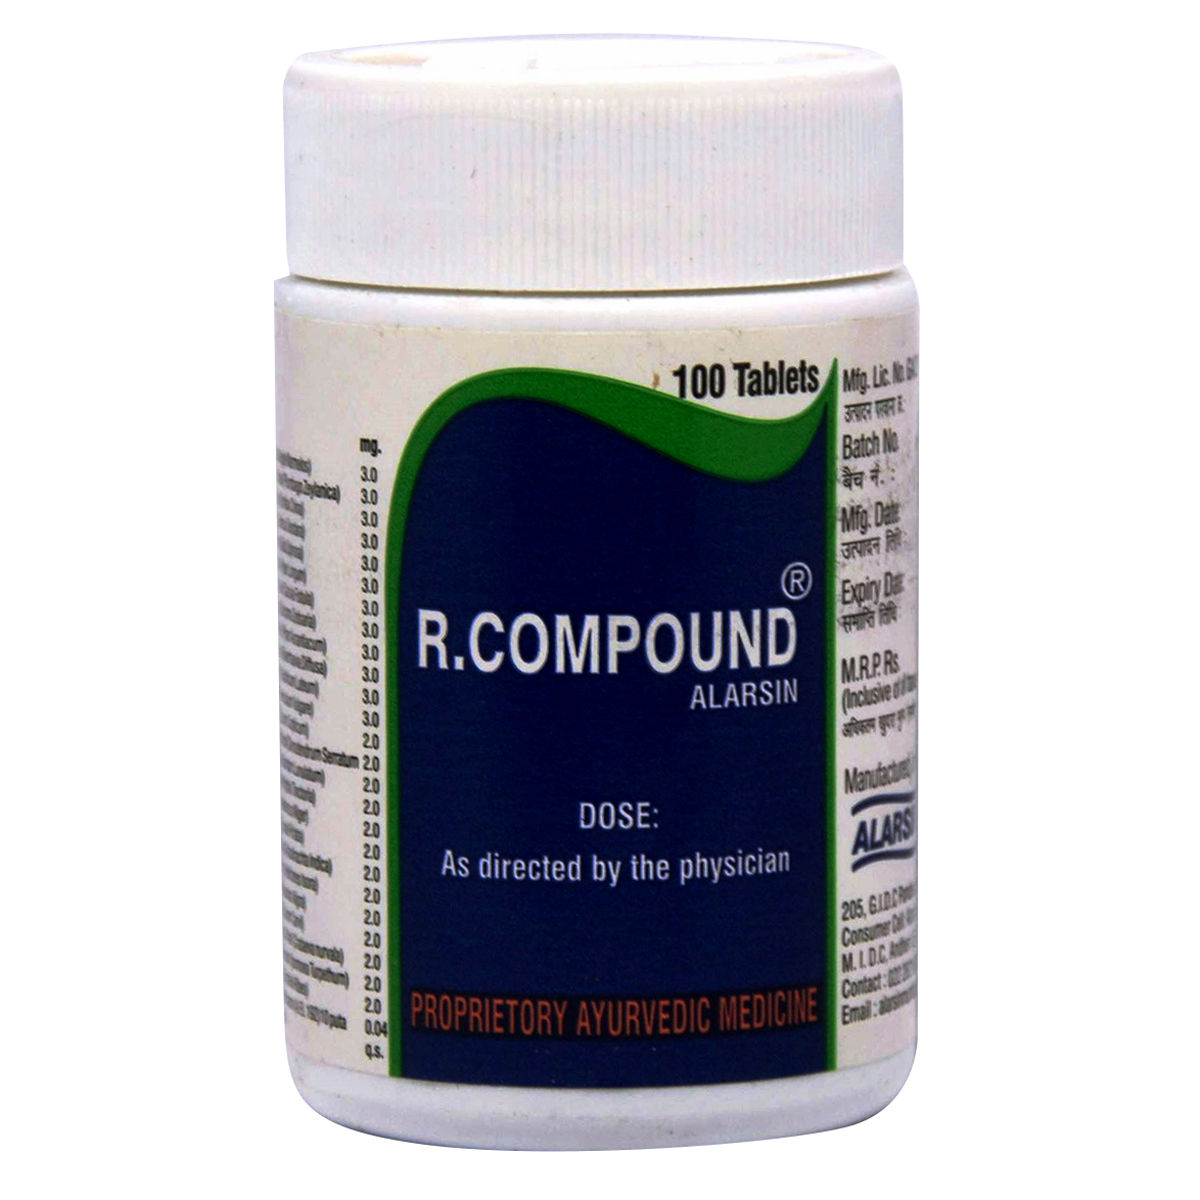 Buy R.Compound Alarsin, 100 Tablets Online